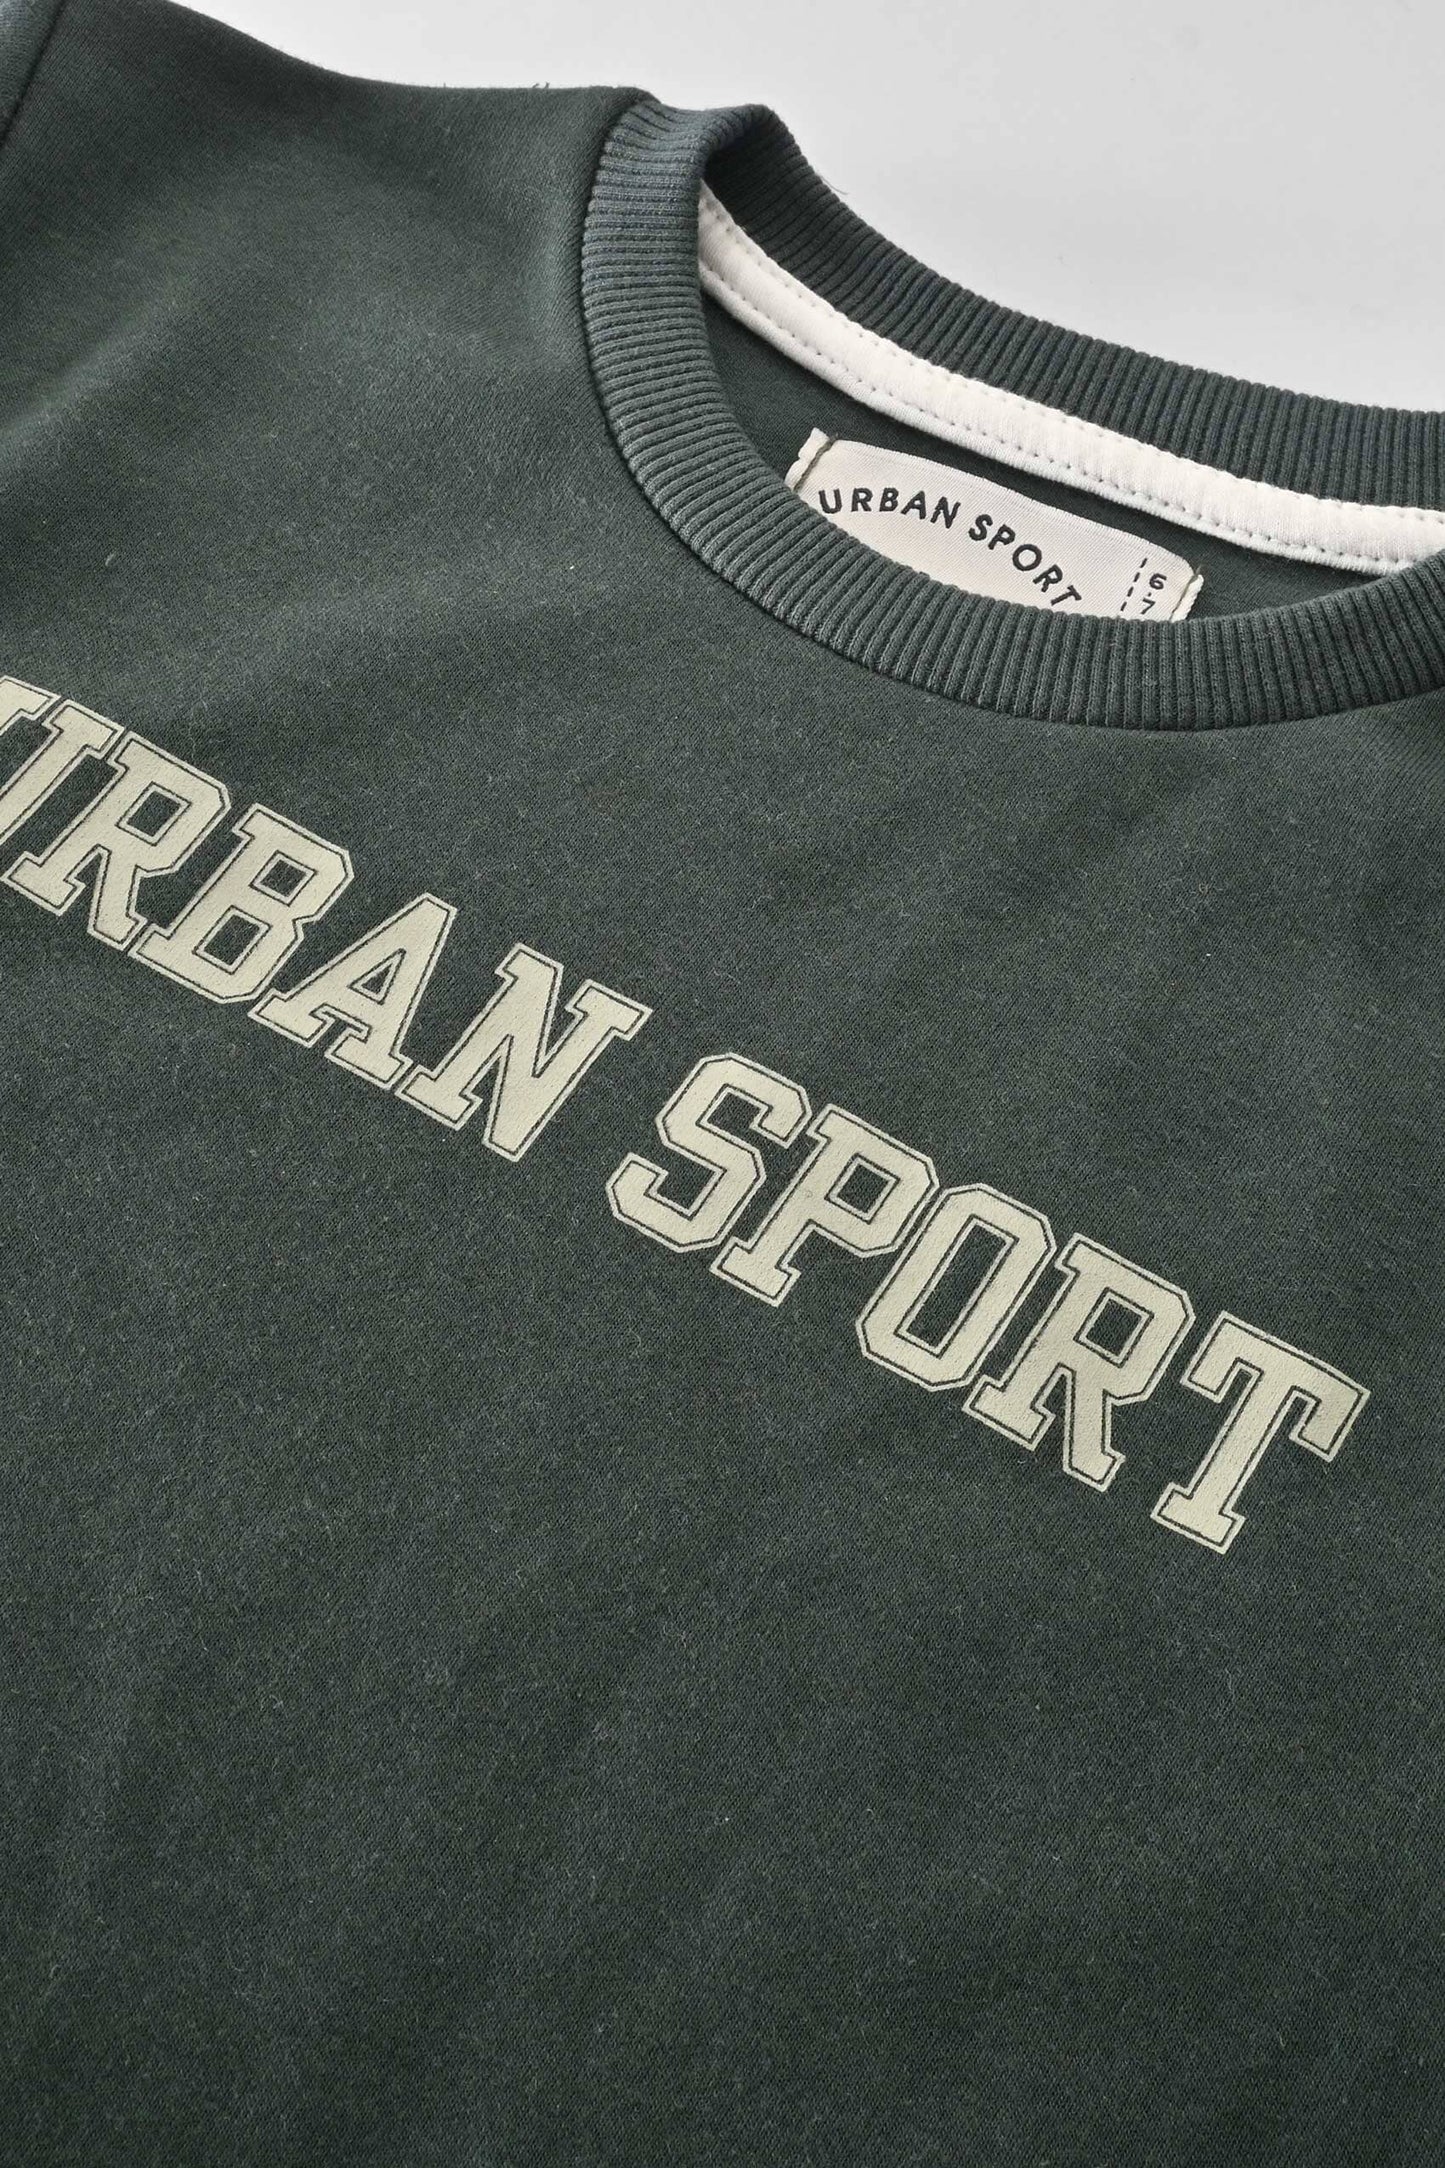 Urban Sports Boy's Printed Superior Sweat Shirt Boy's Sweat Shirt LFS 